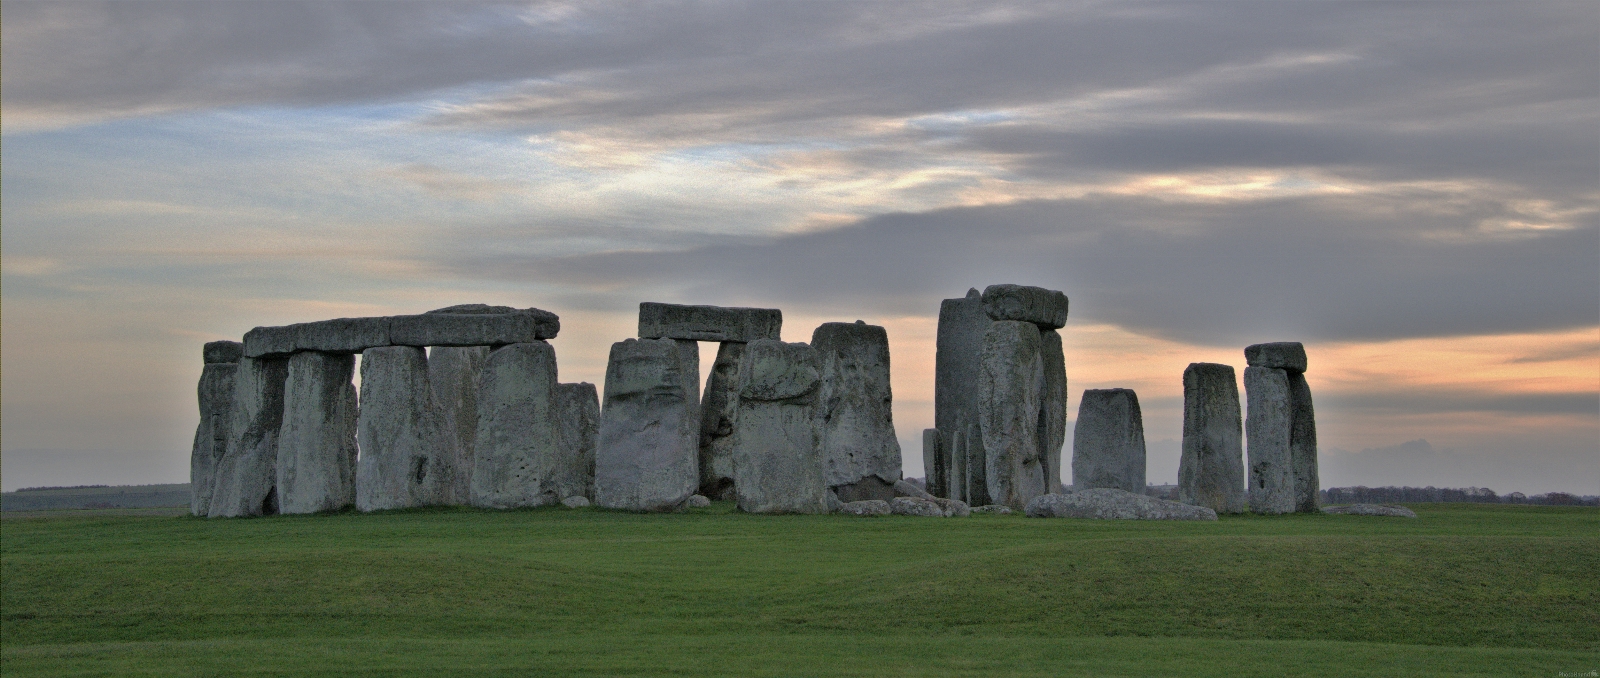 Image of Stonehenge by michael bennett